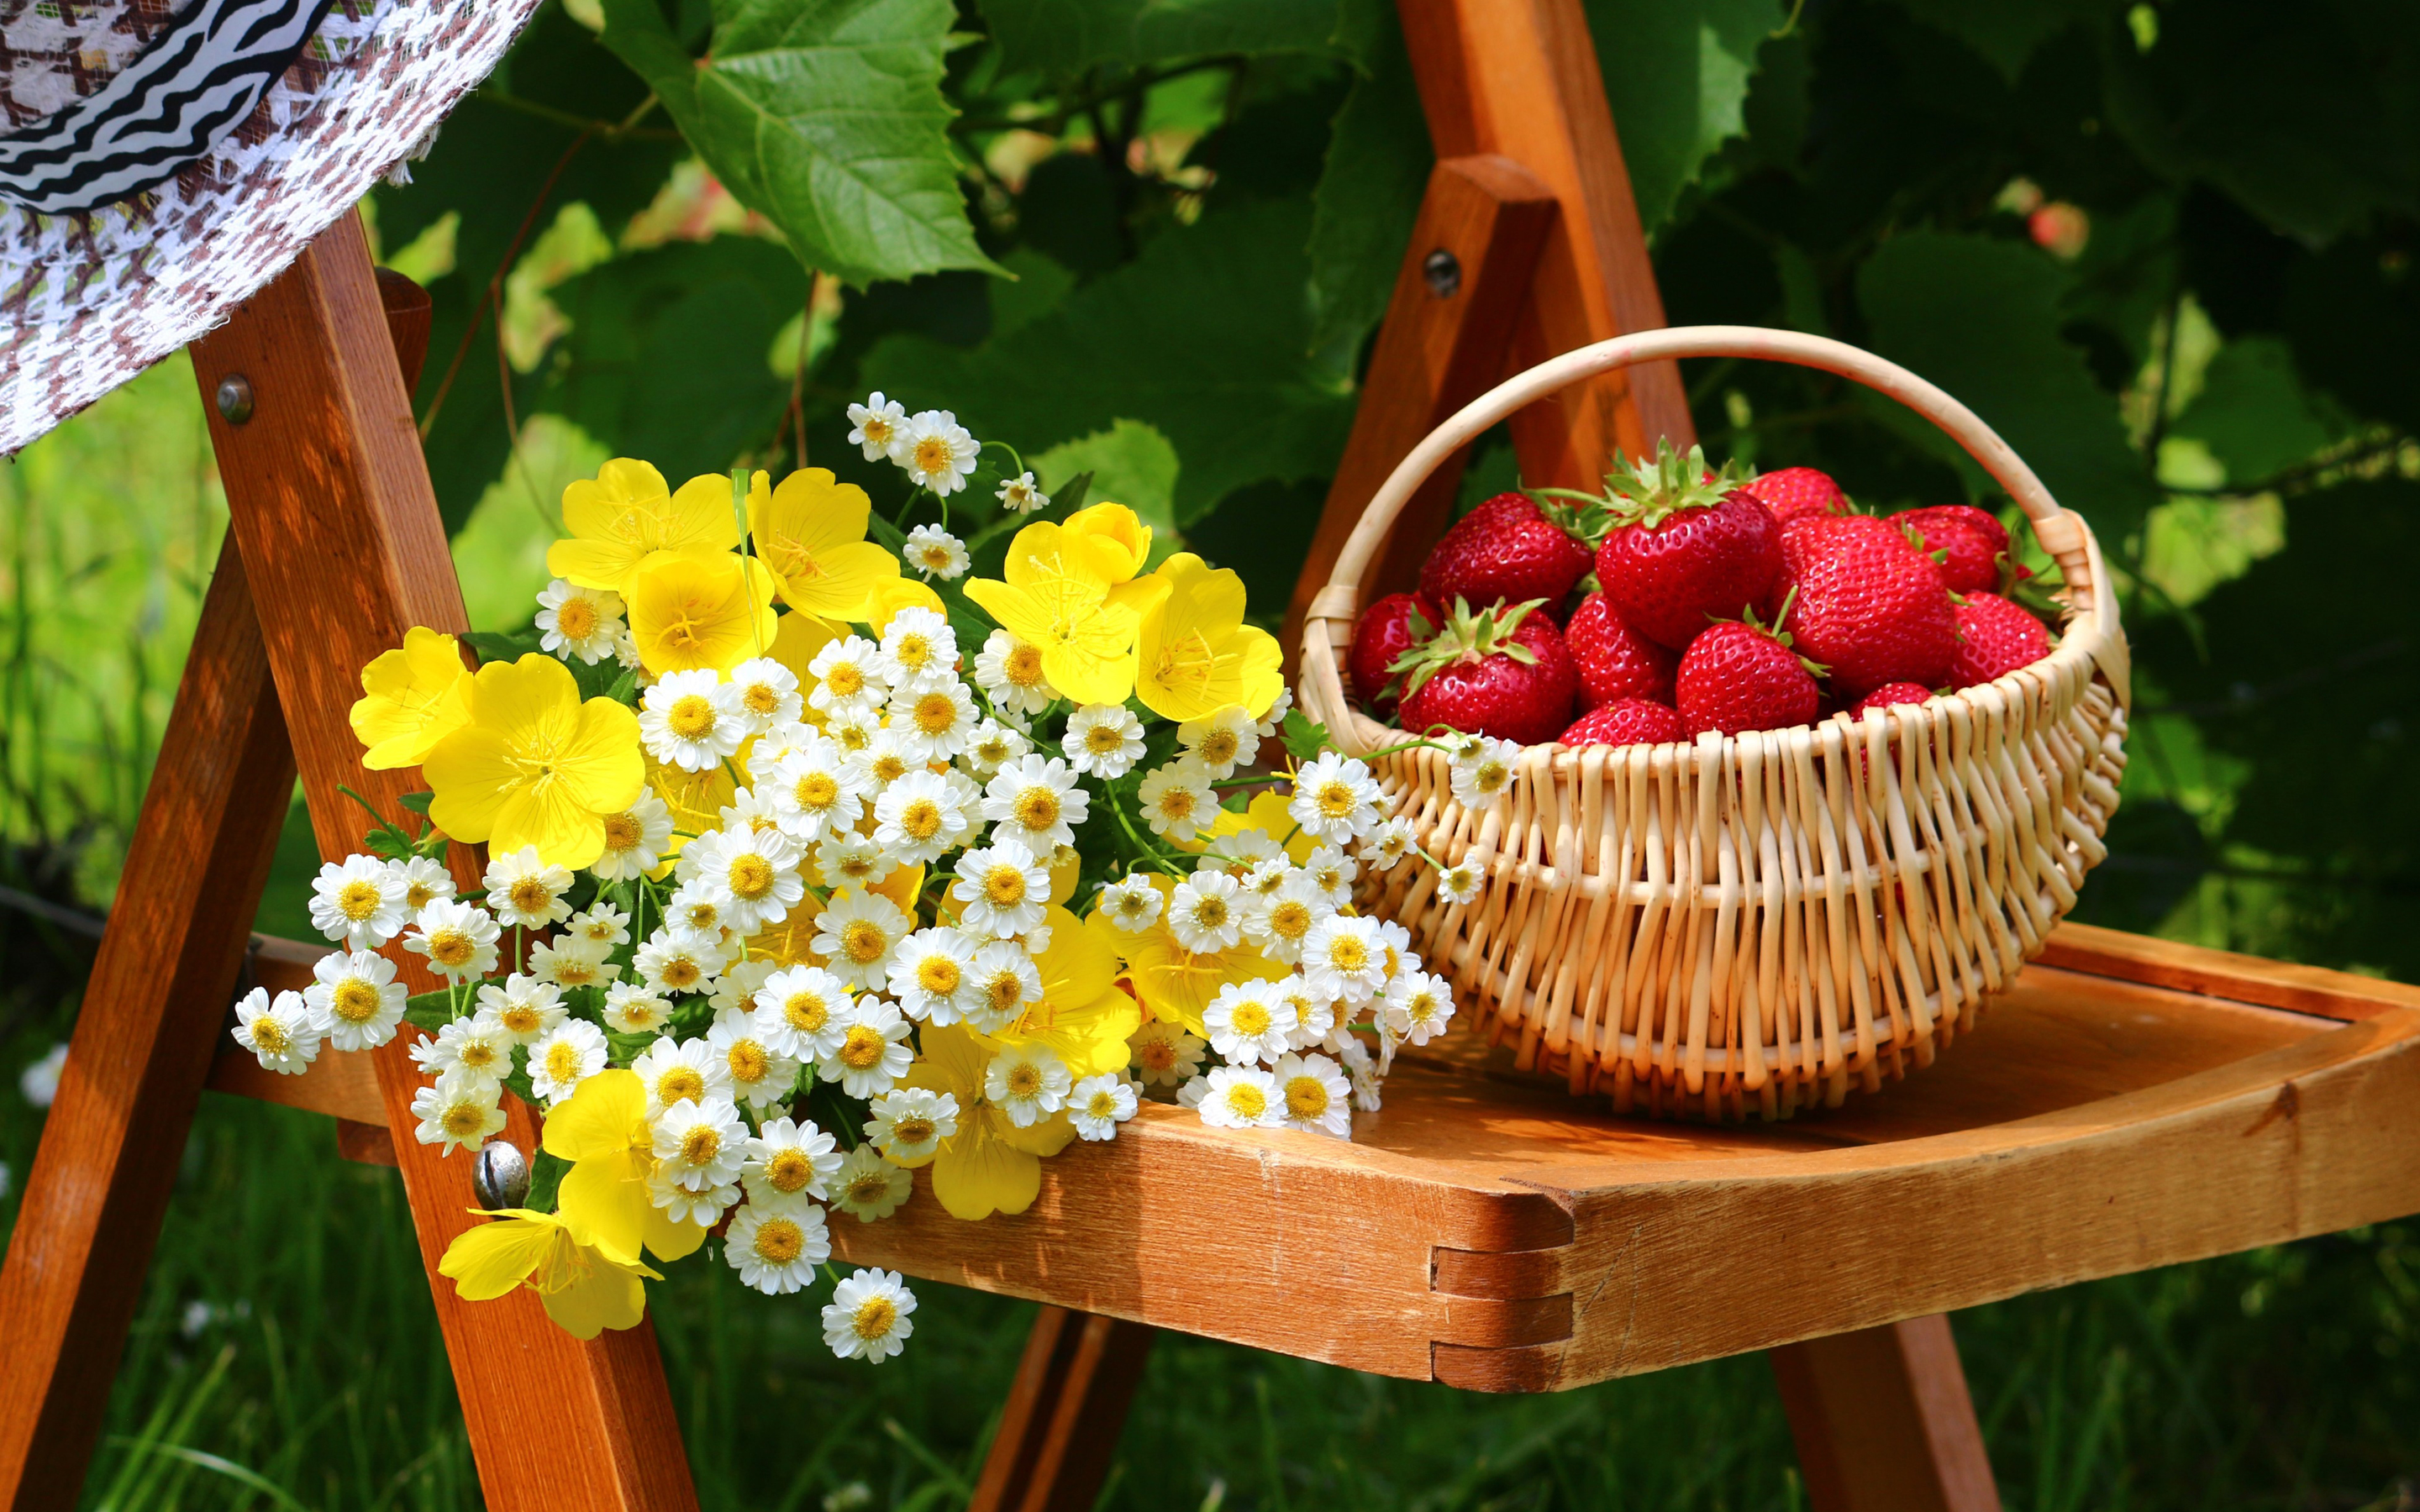 nature, strawberry, food, basket, flower, garden, fruits